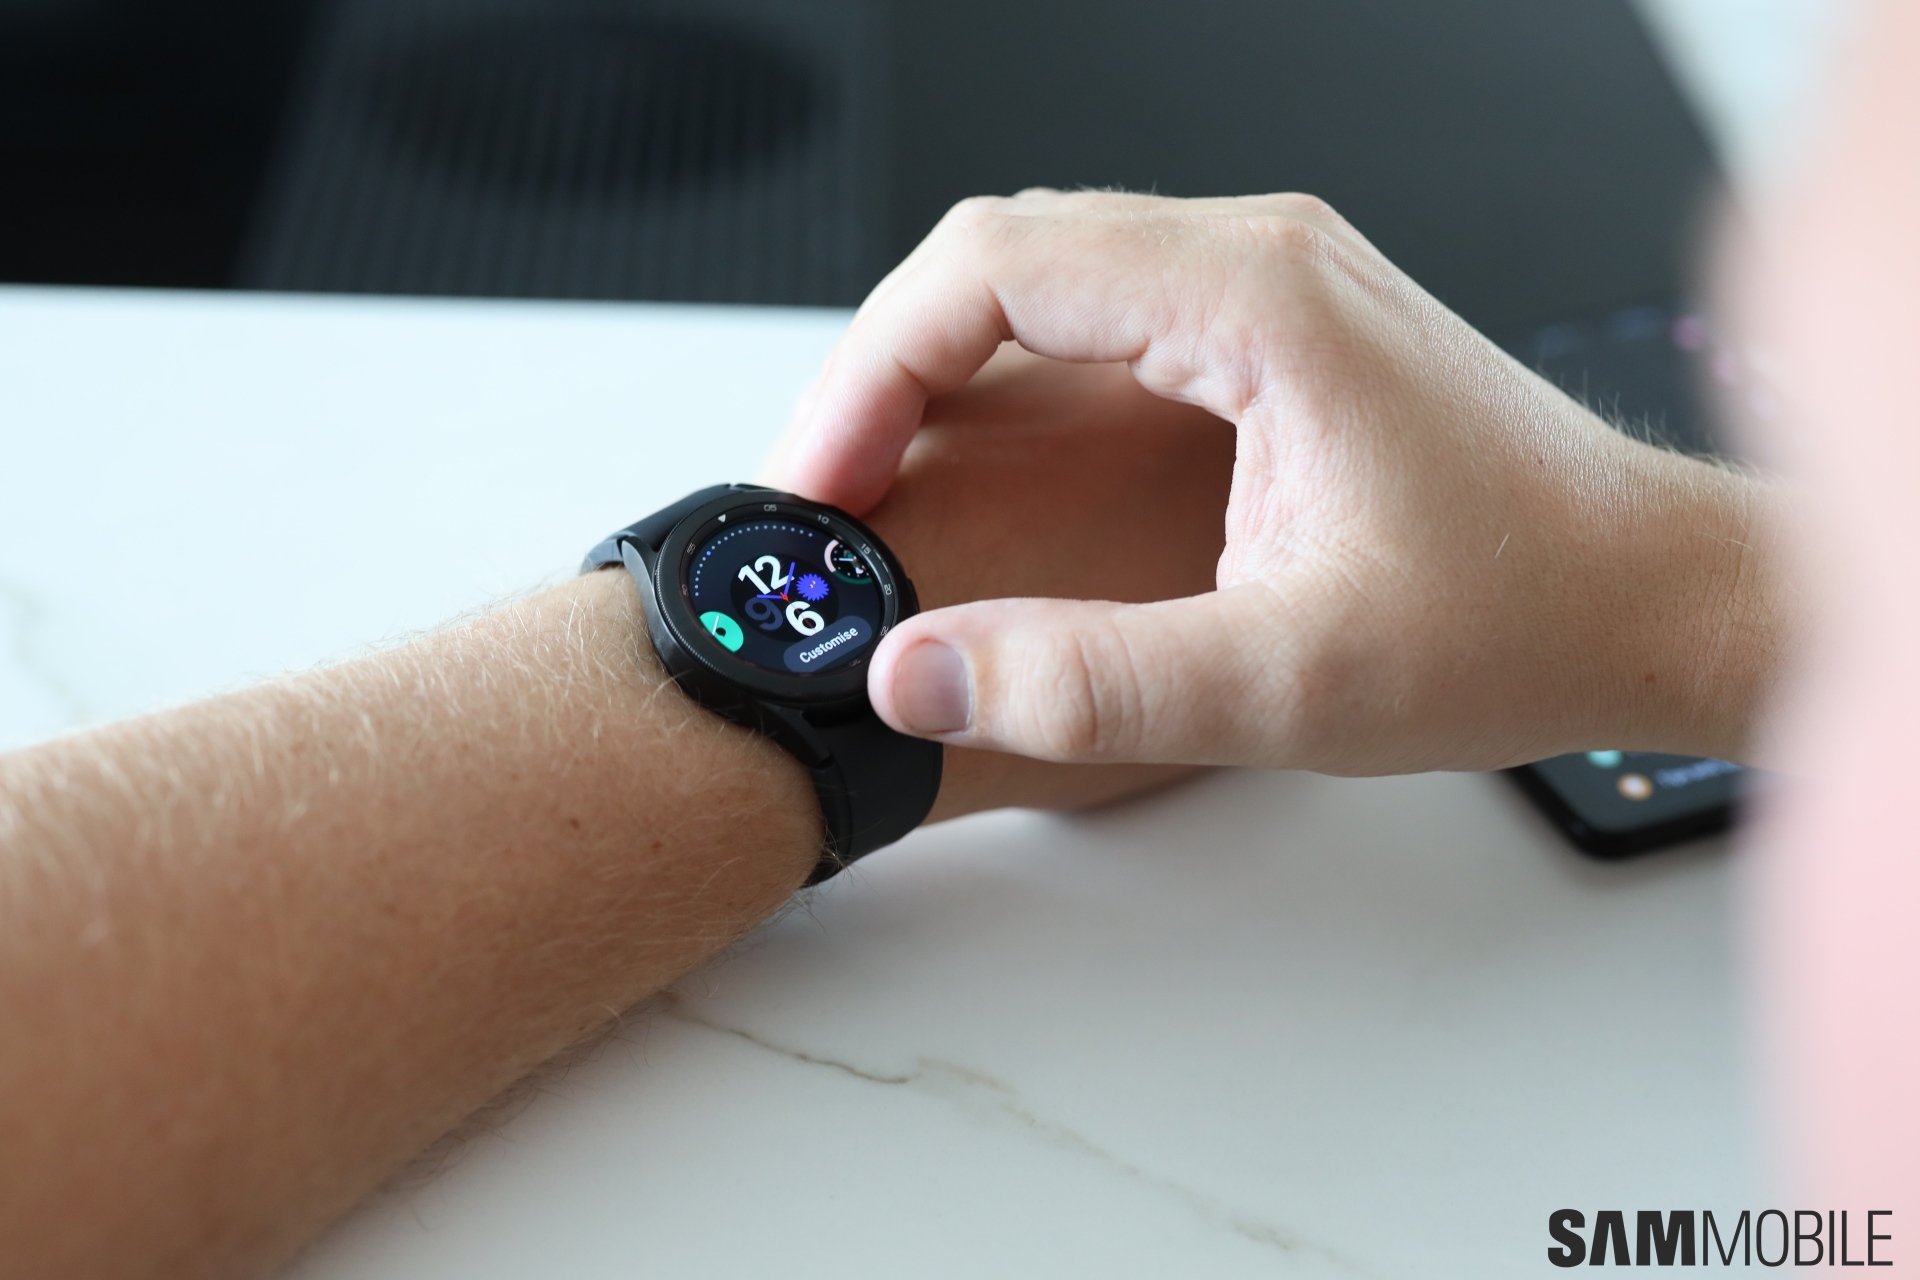 Samsung Galaxy Watch 4 review: A Wear OS watch for Samsung fans